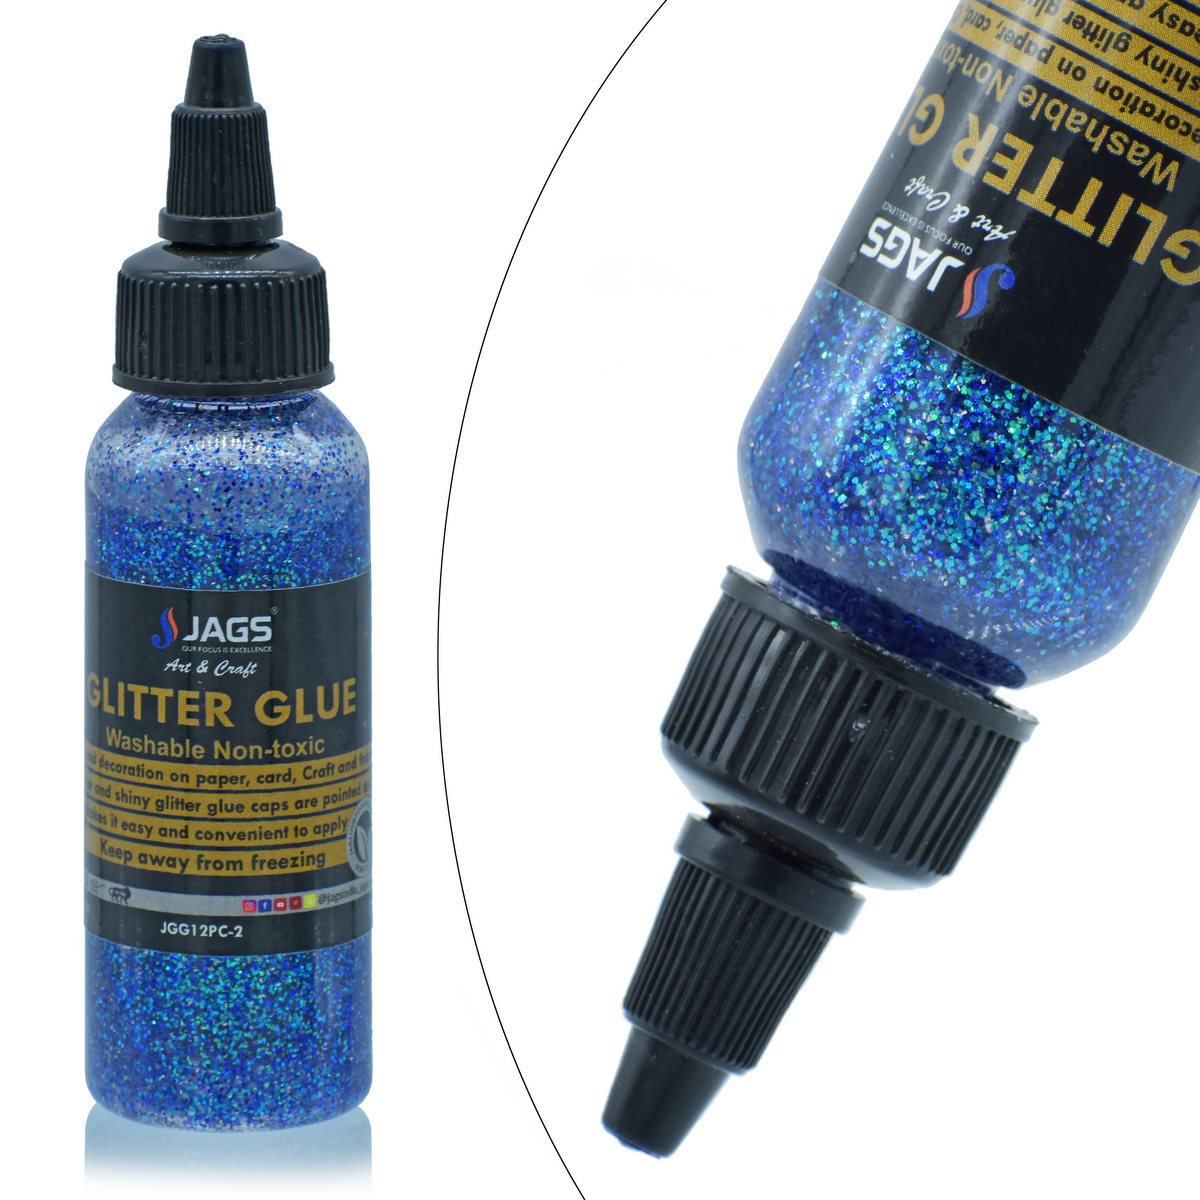 jags-mumbai Glue Glitter Glue Art Shaker Any 1 Colour